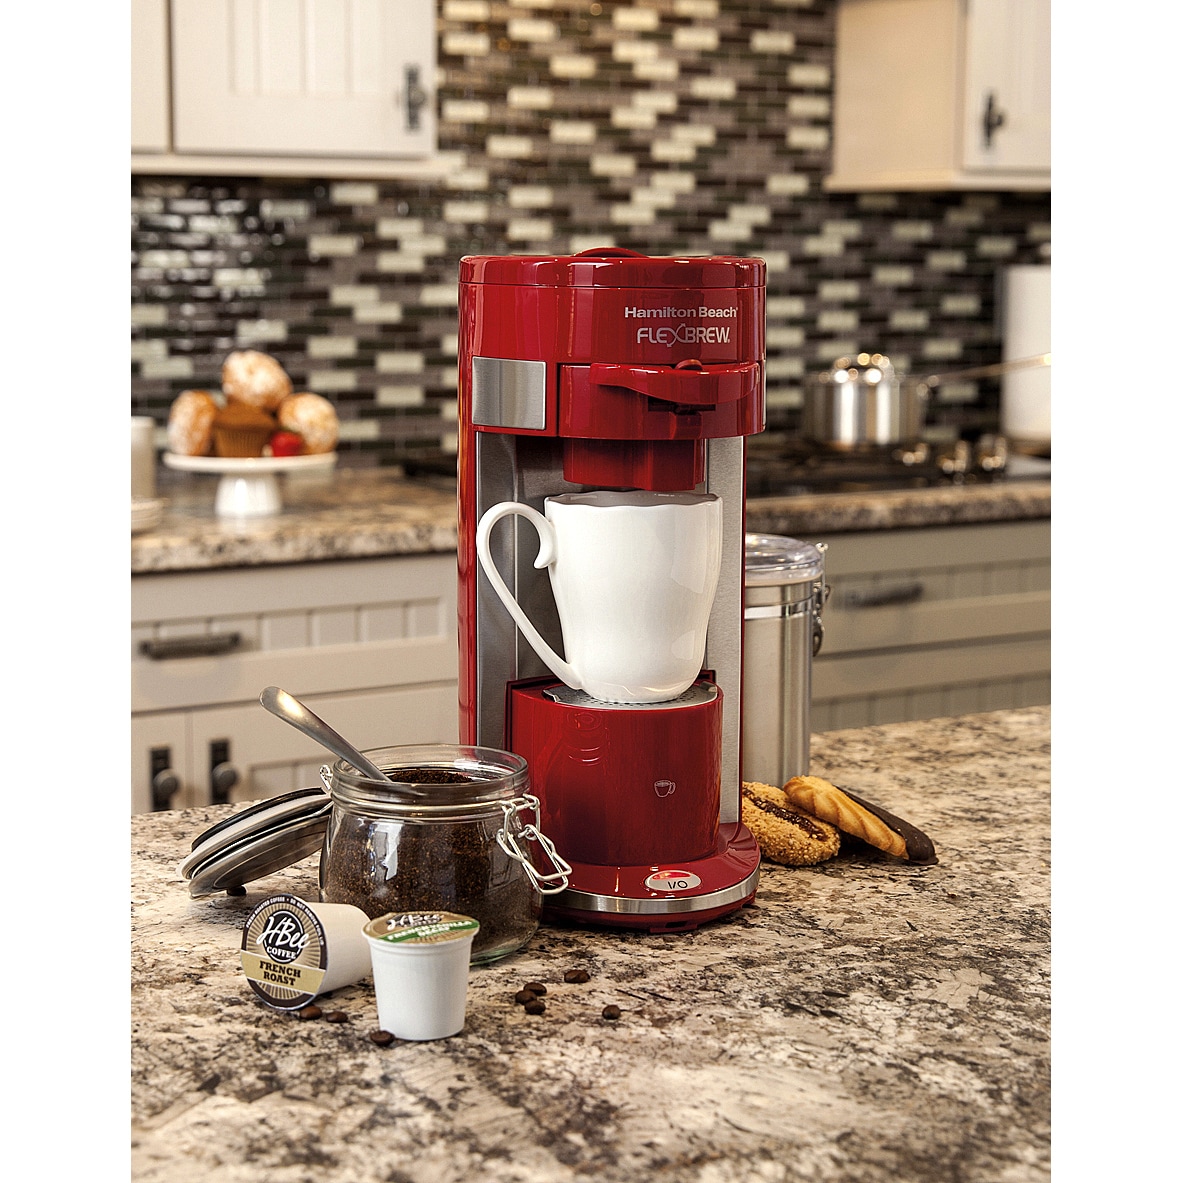 Hamilton Beach FlexBrew Single-Serve Coffee Maker Red 49962 - Best Buy